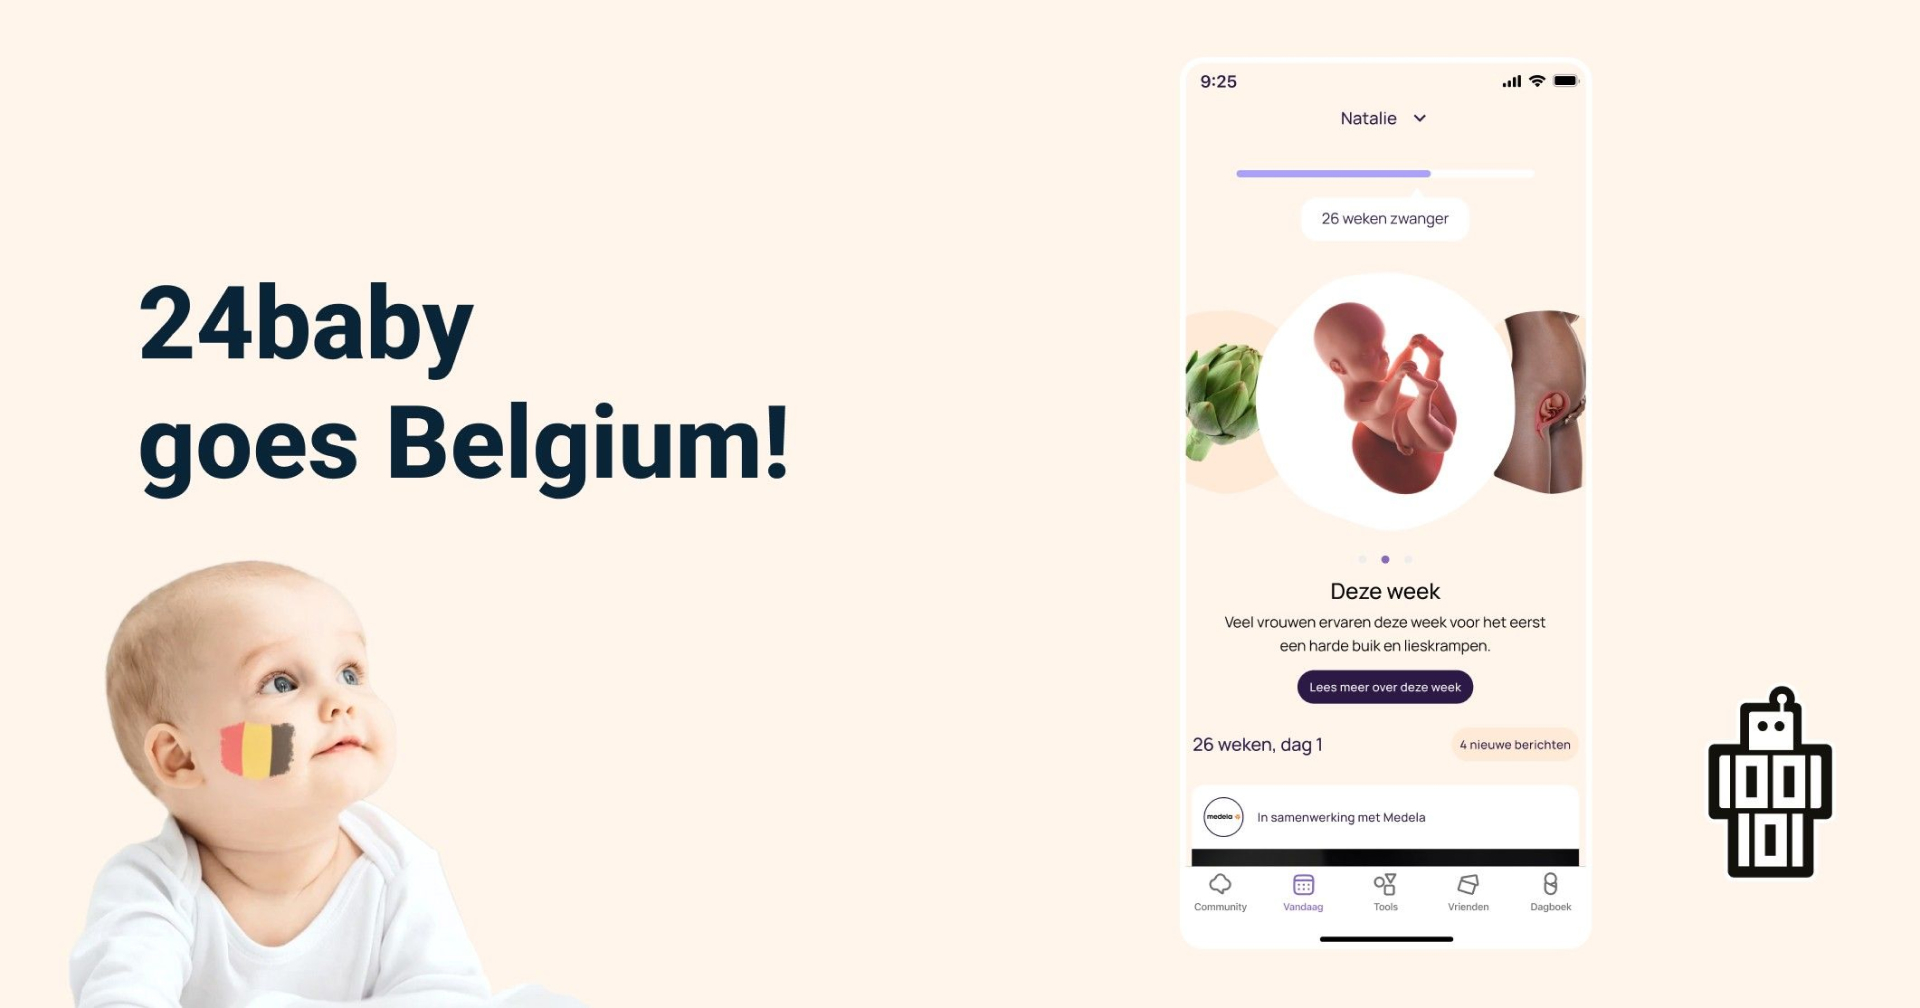 24baby goes to Belgium! - 24baby launches app especially for Belgium!